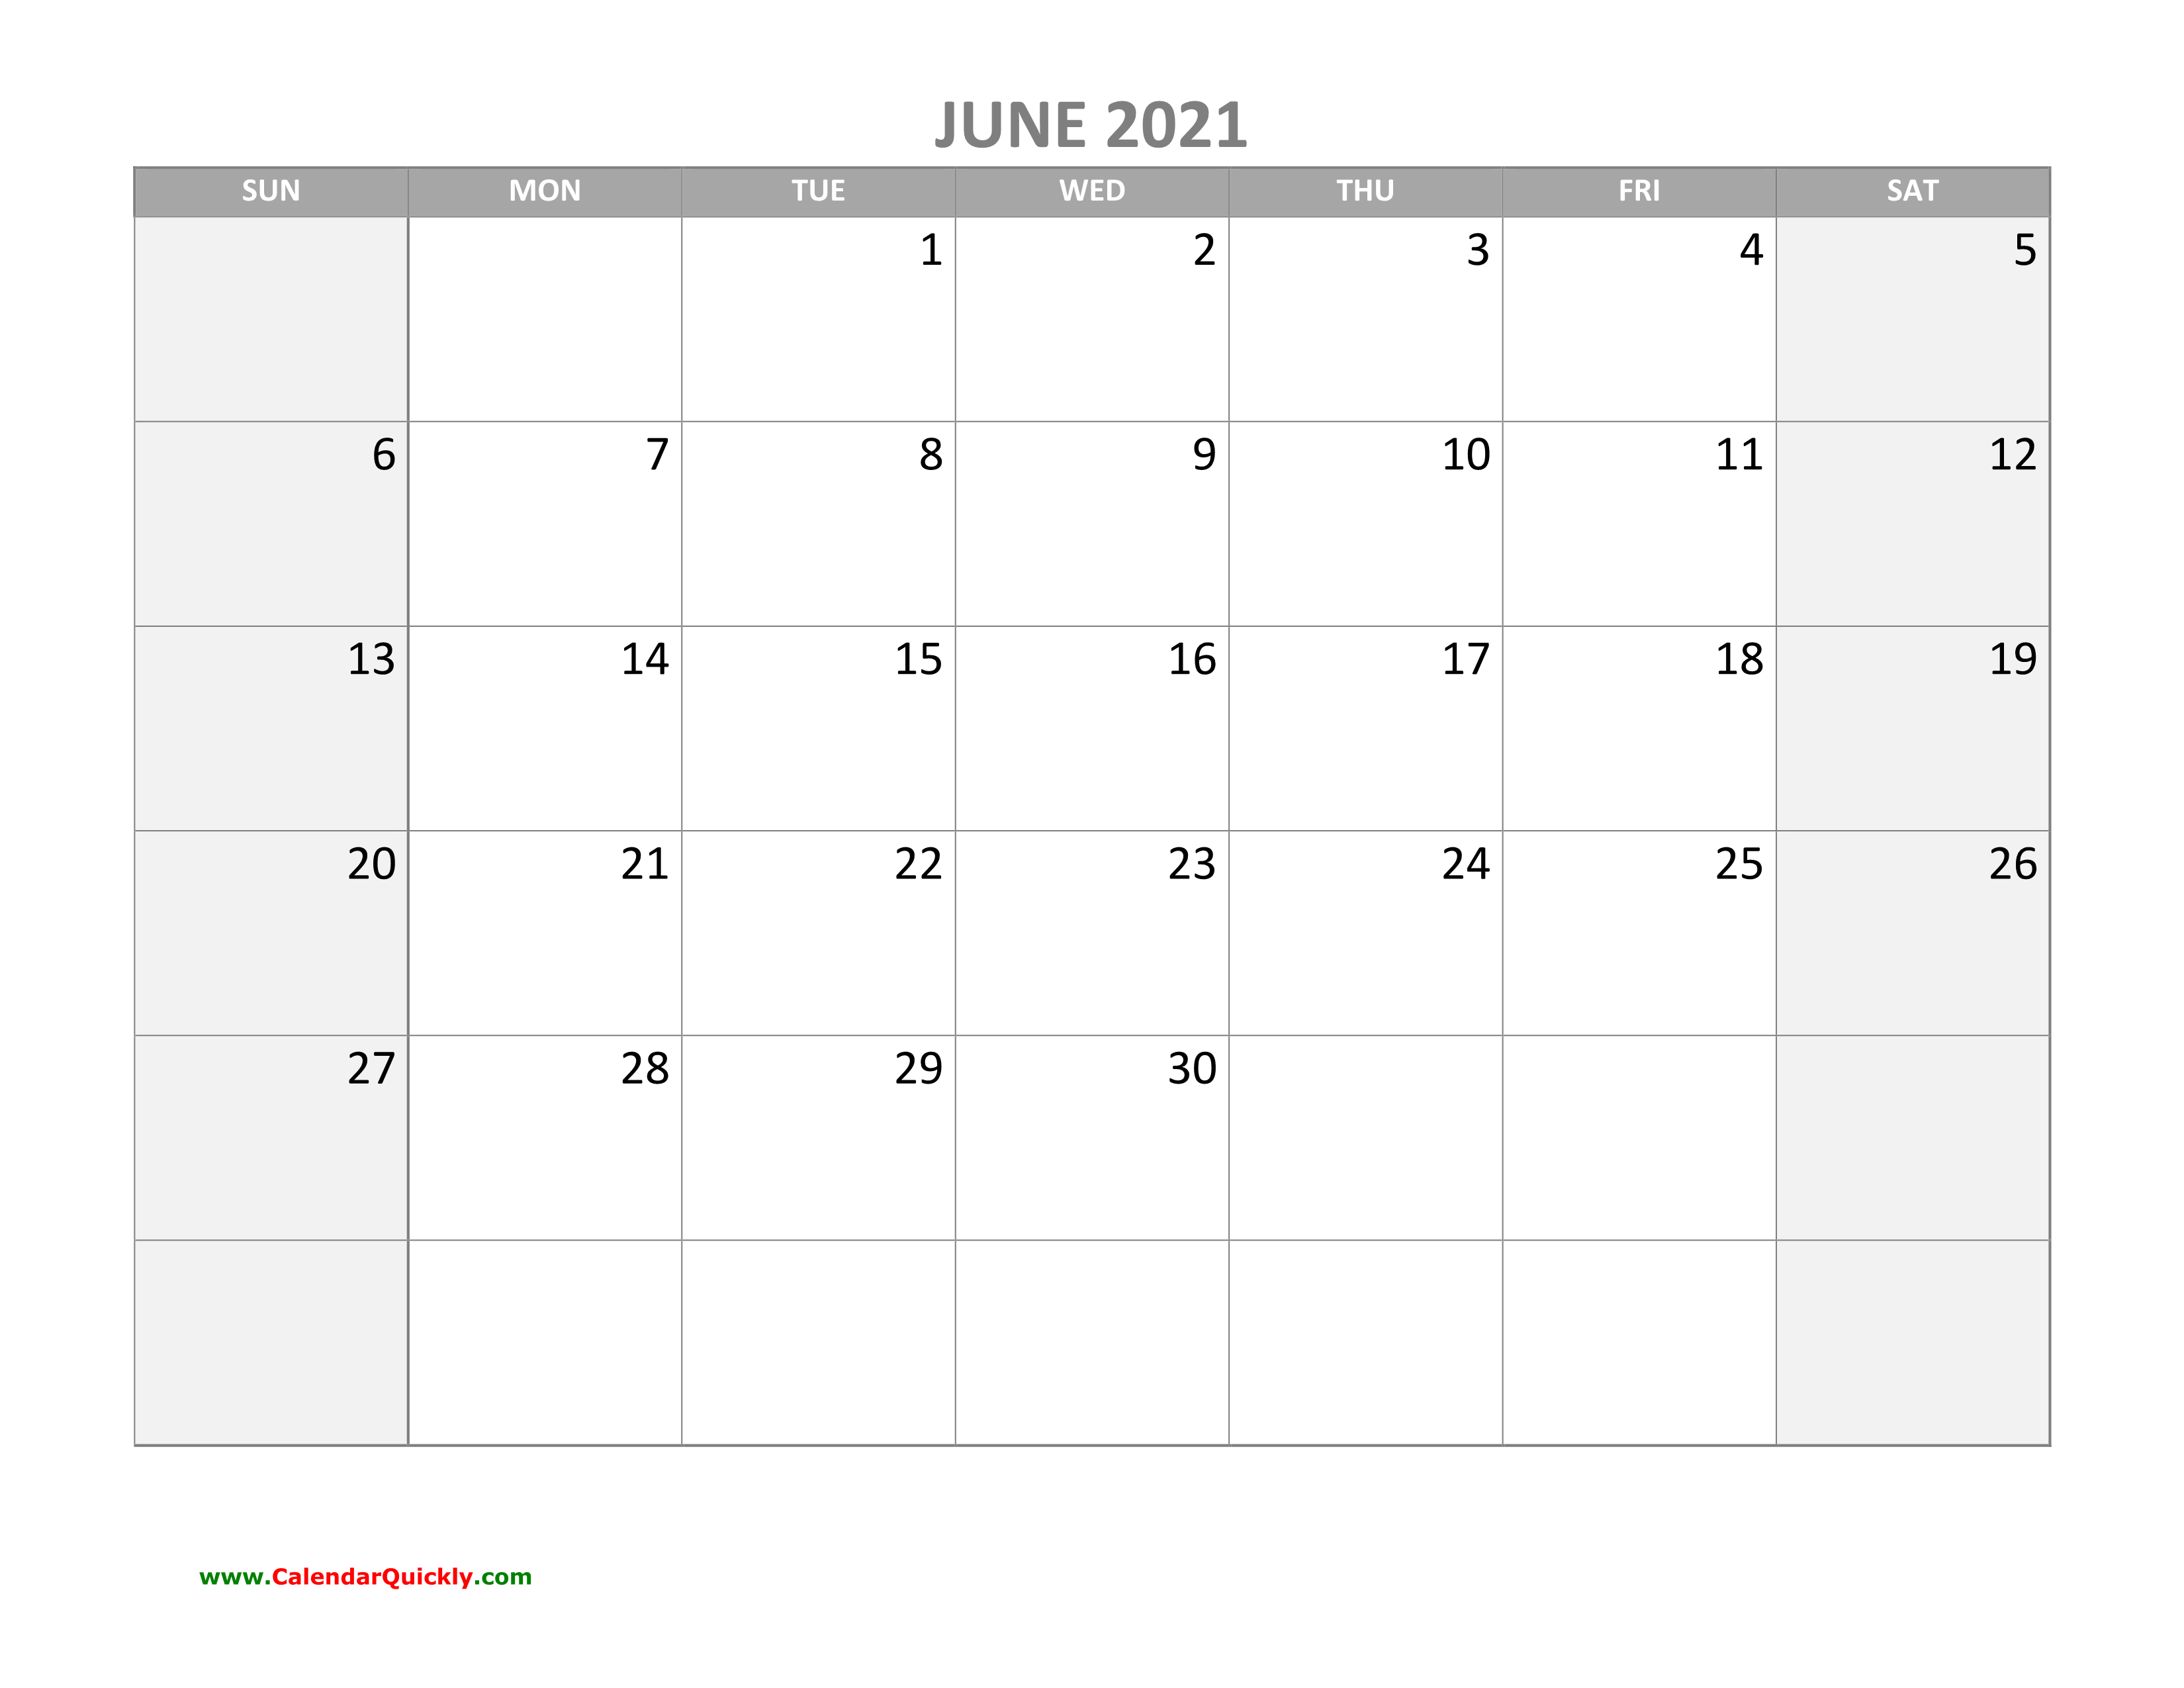 June Calendar 2021 with Holidays Calendar Quickly